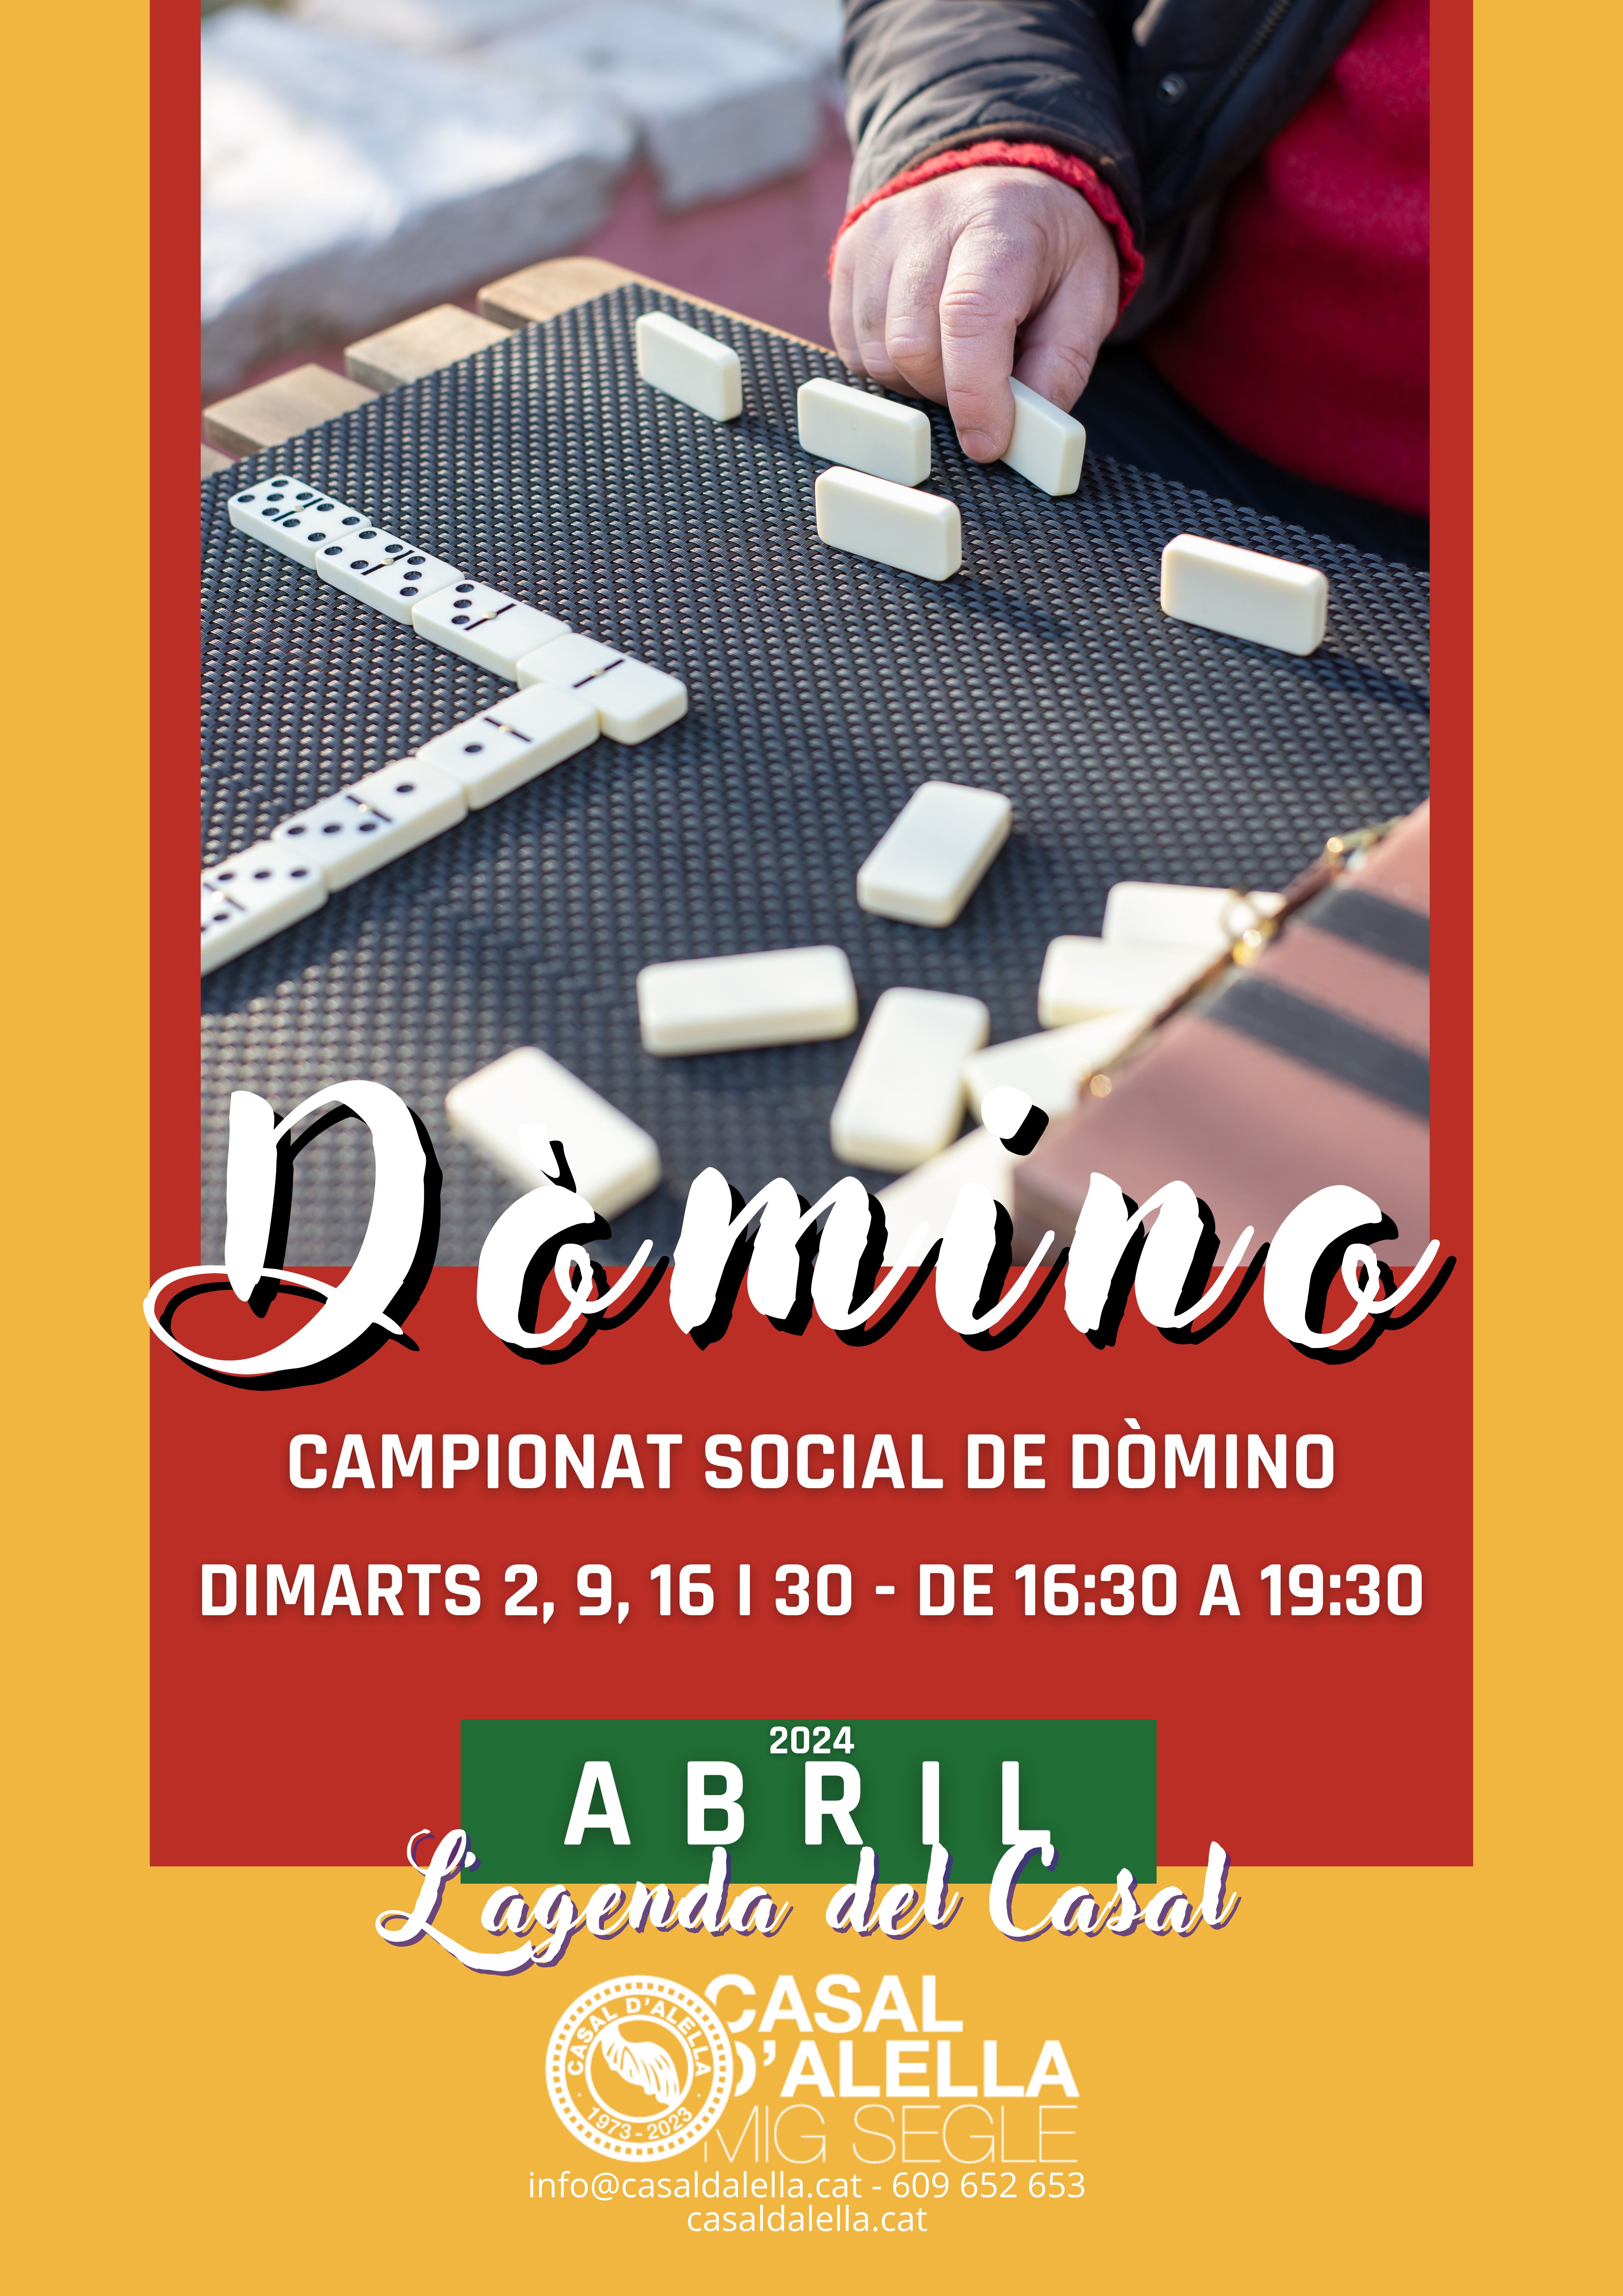 Campionat social de domino